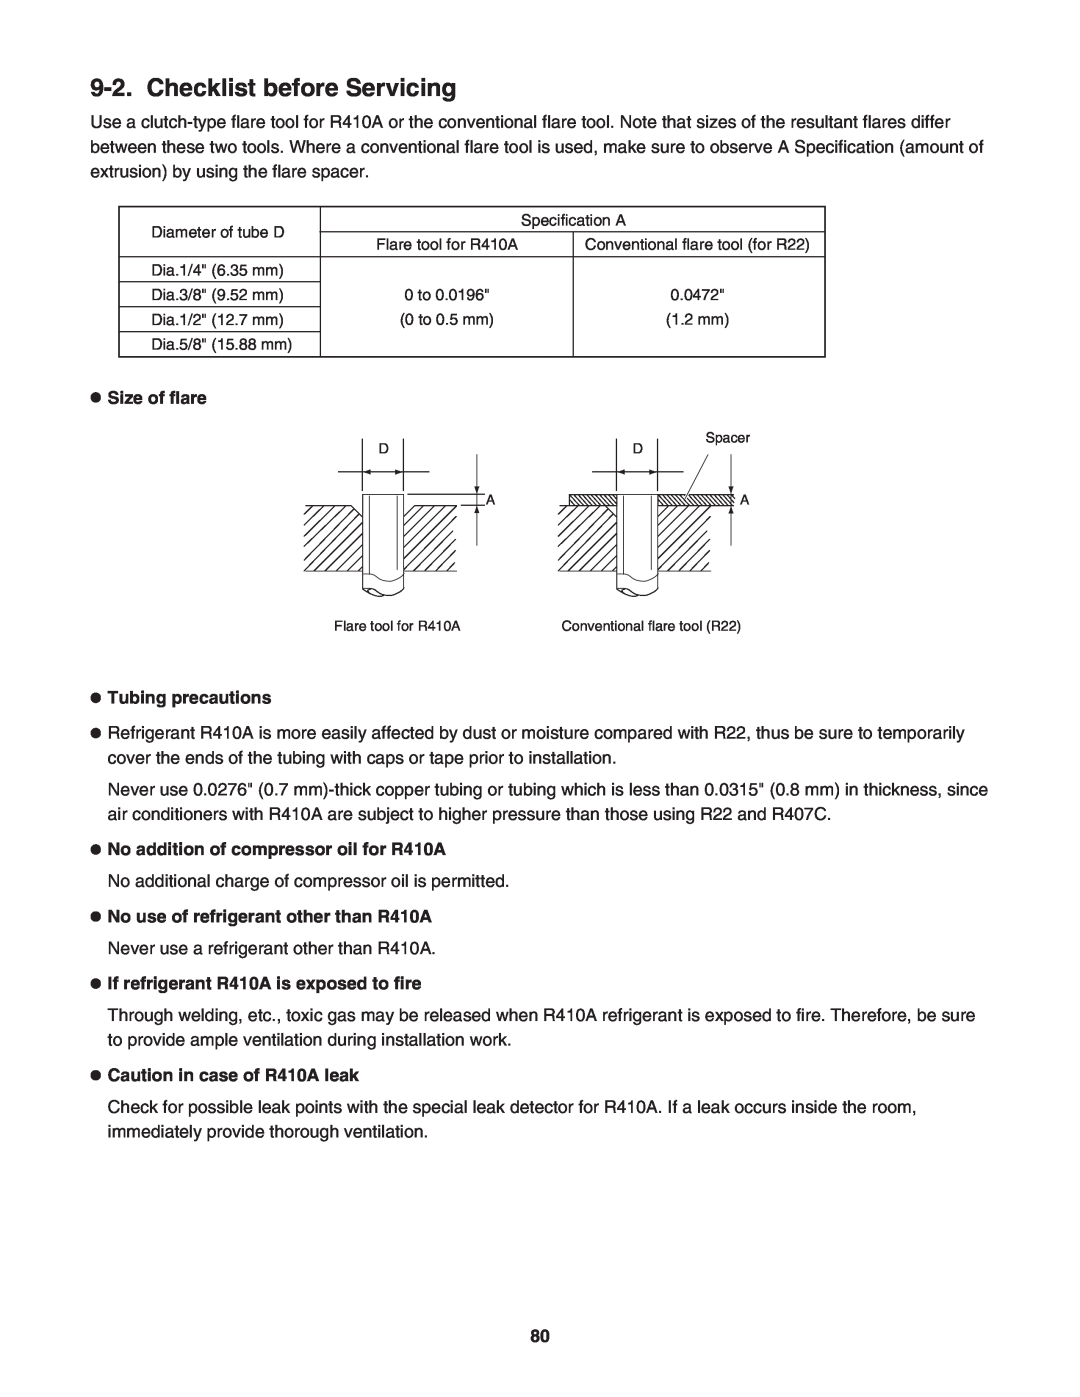 Panasonic CU-4KS31NBU Checklist before Servicing, Size of flare, Tubing precautions, Caution in case of R410A leak 